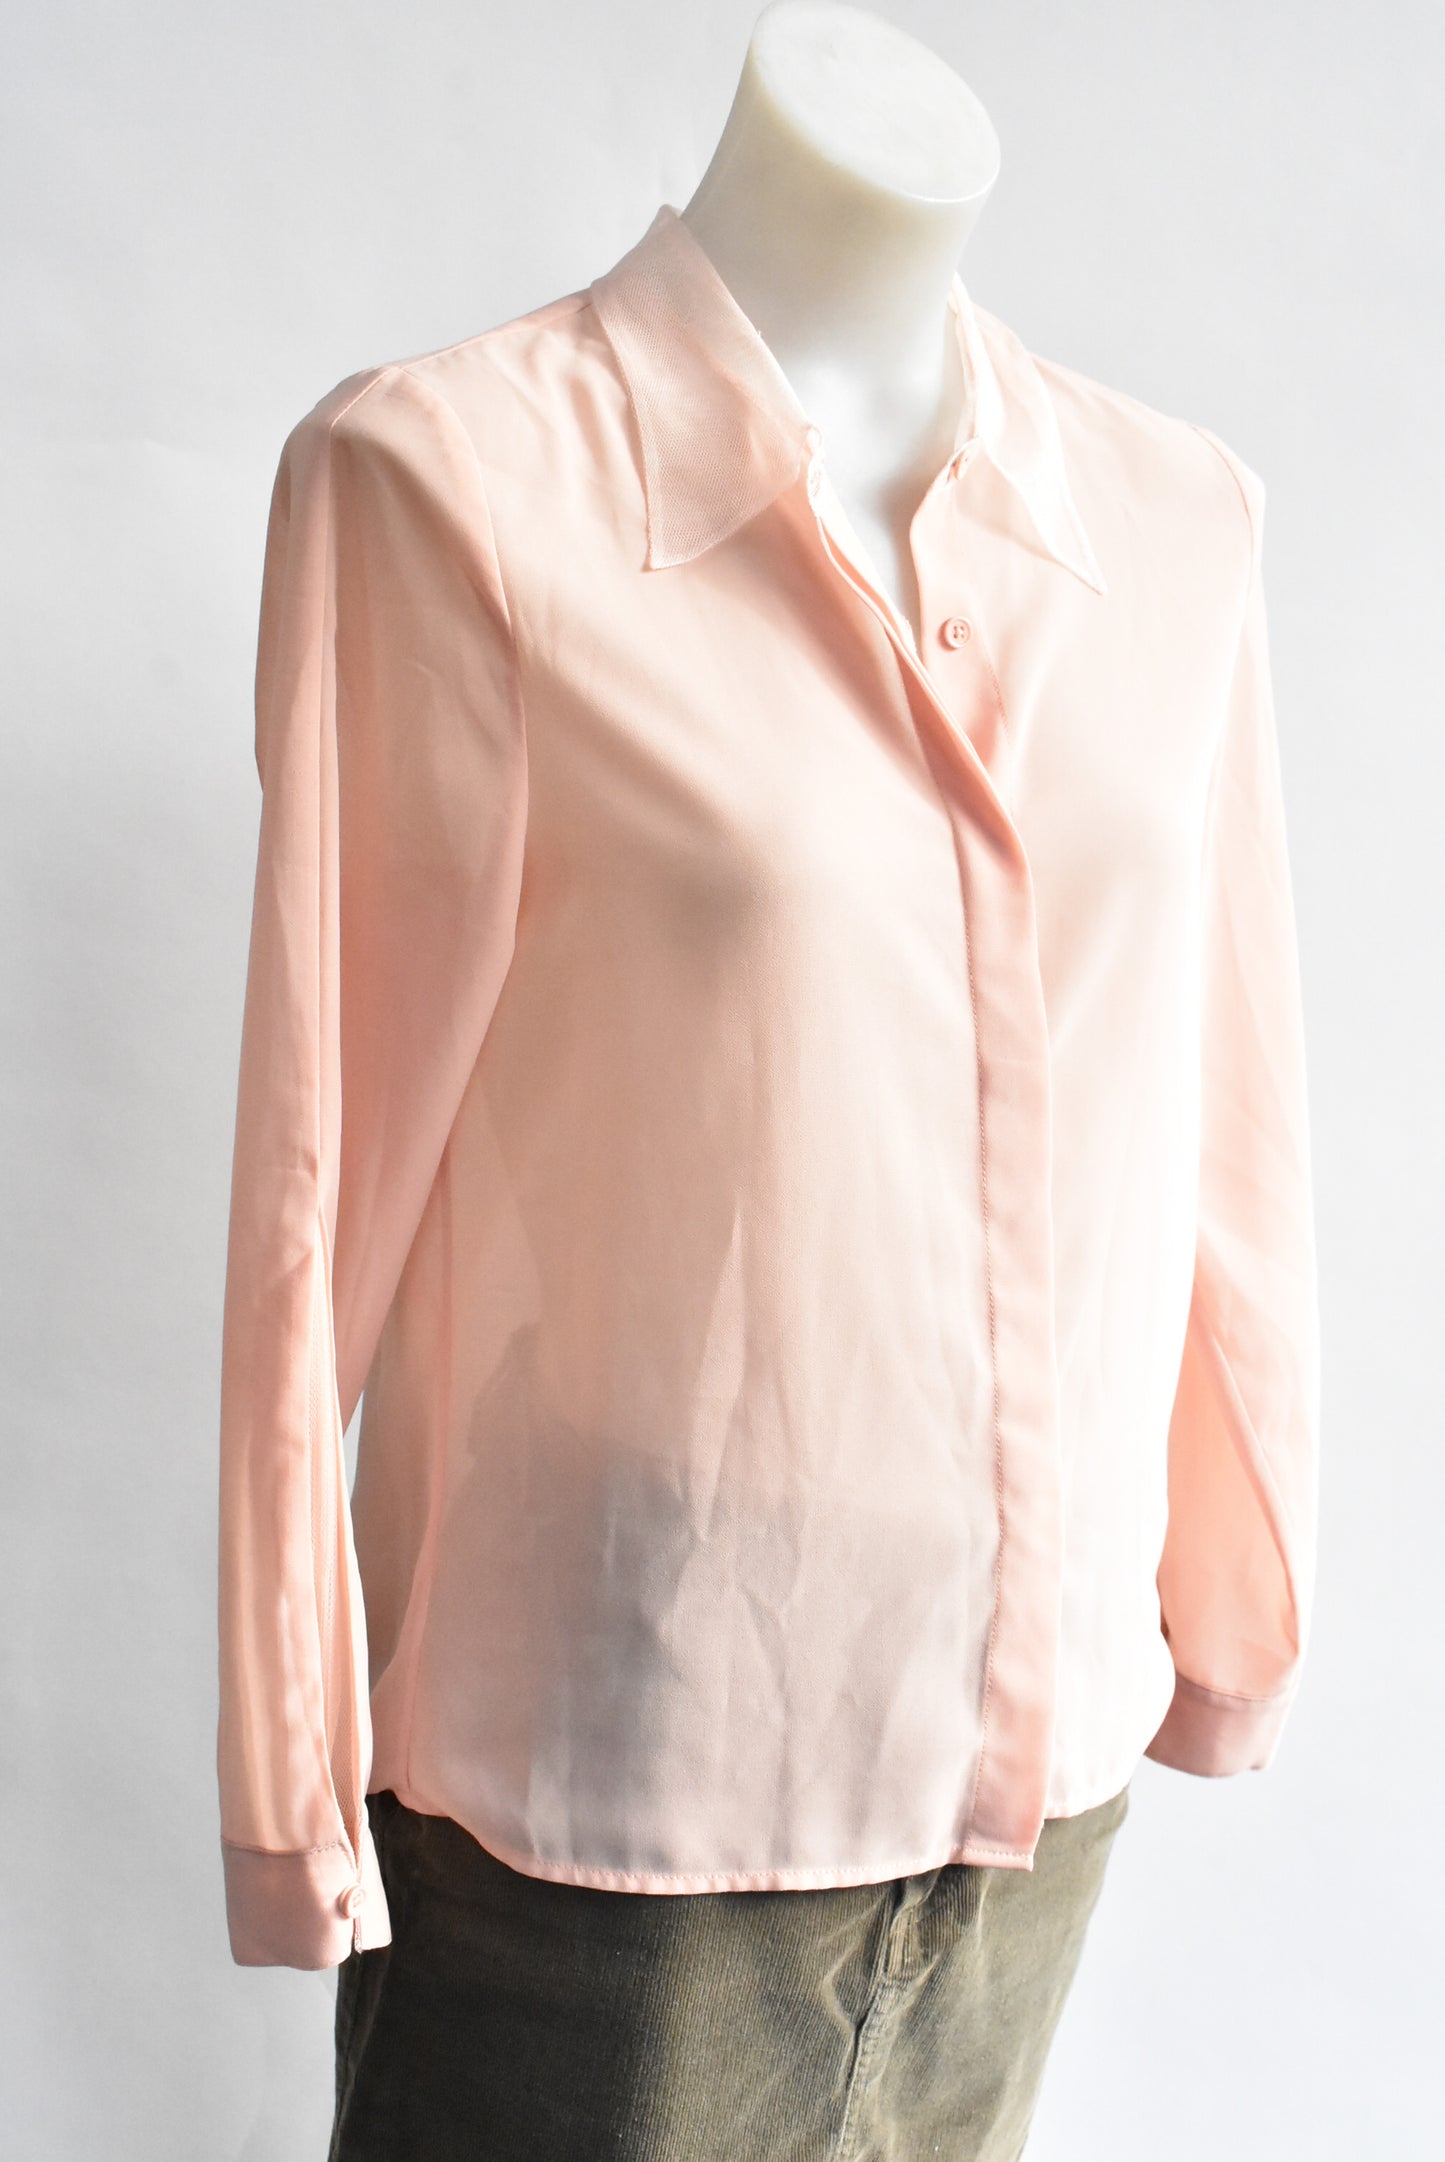 Aalis peach chiffon blouse, 36